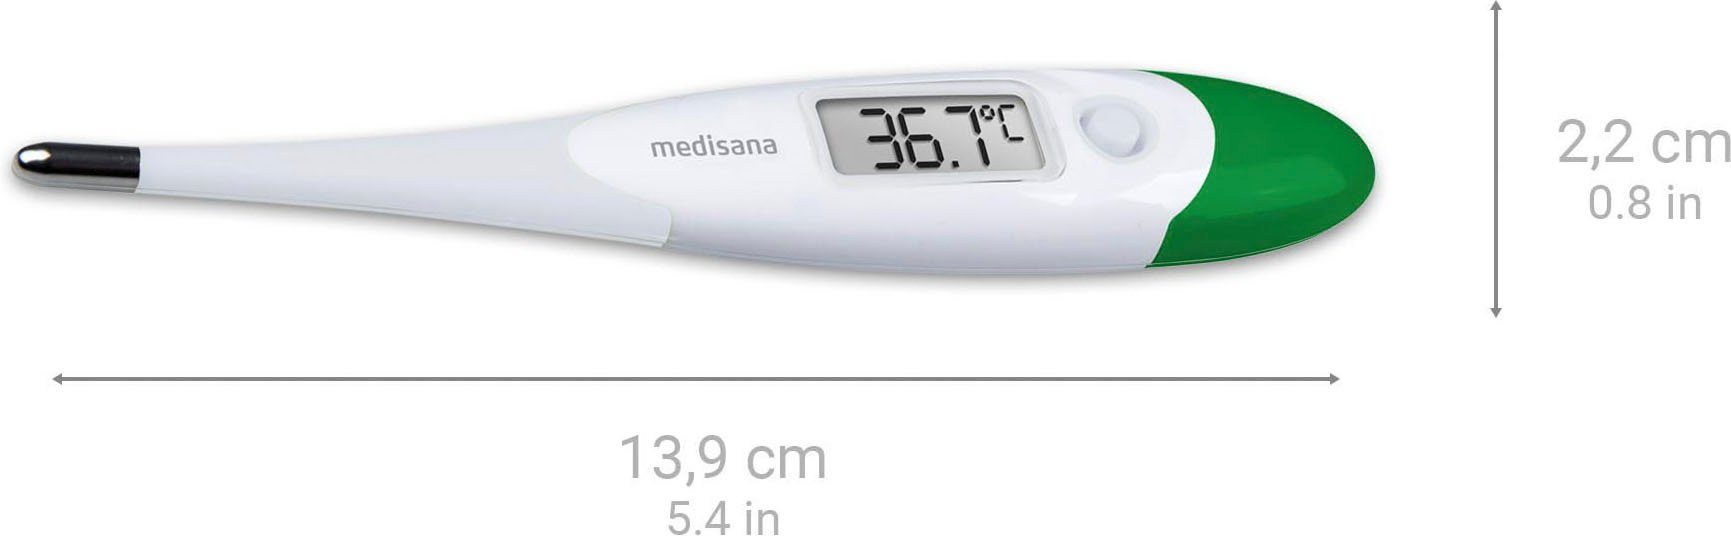 Fieberthermometer TM700 Medisana